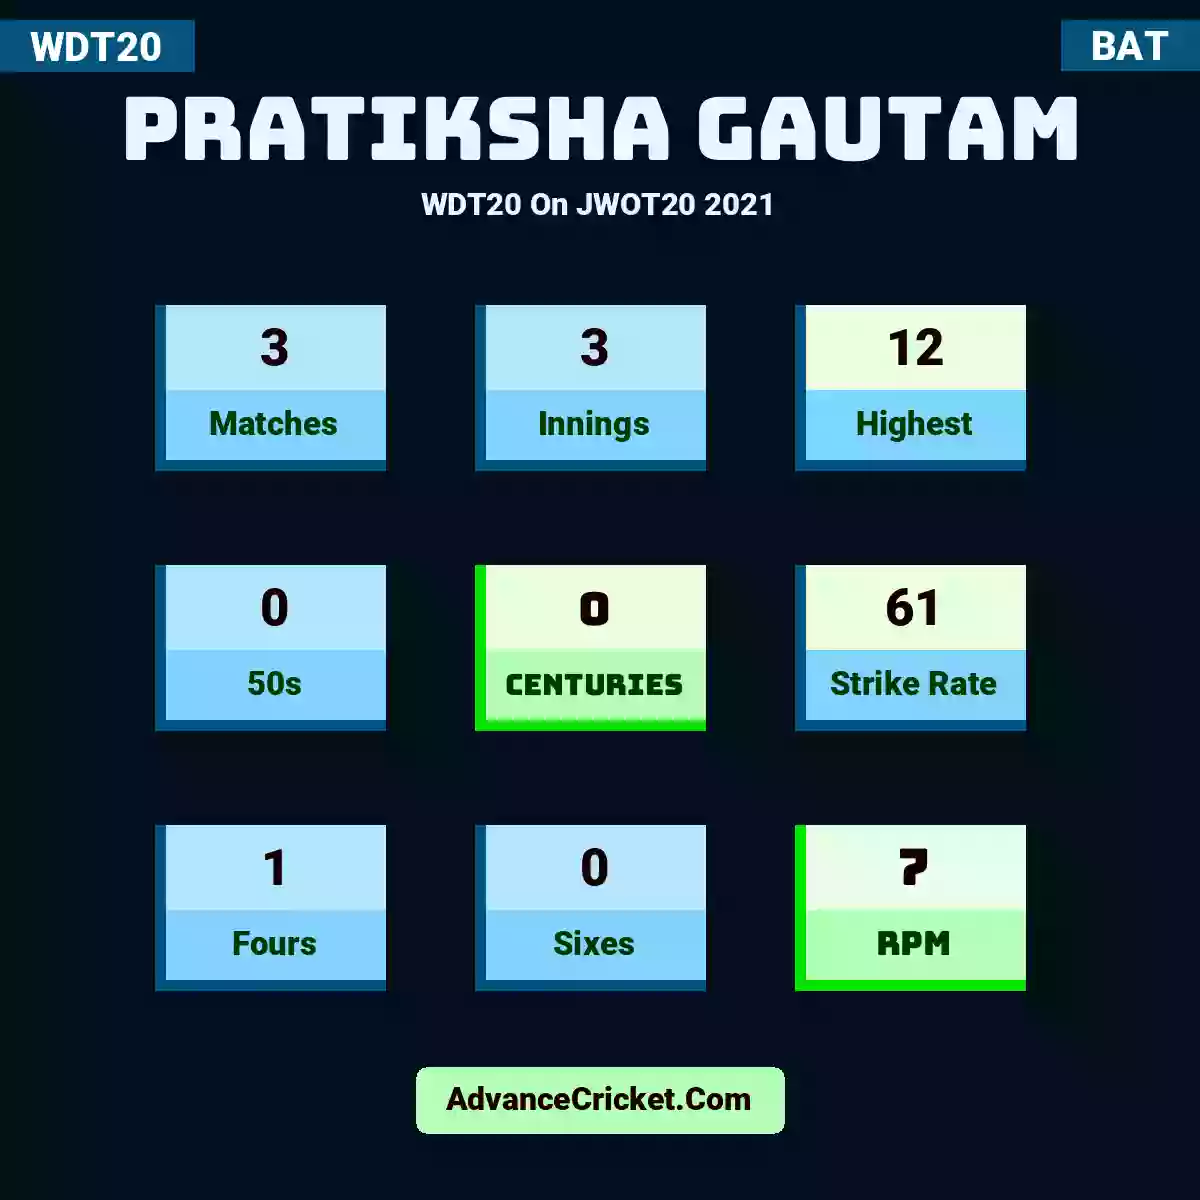 Pratiksha Gautam WDT20  On JWOT20 2021, Pratiksha Gautam played 3 matches, scored 12 runs as highest, 0 half-centuries, and 0 centuries, with a strike rate of 61. P.Gautam hit 1 fours and 0 sixes, with an RPM of 7.